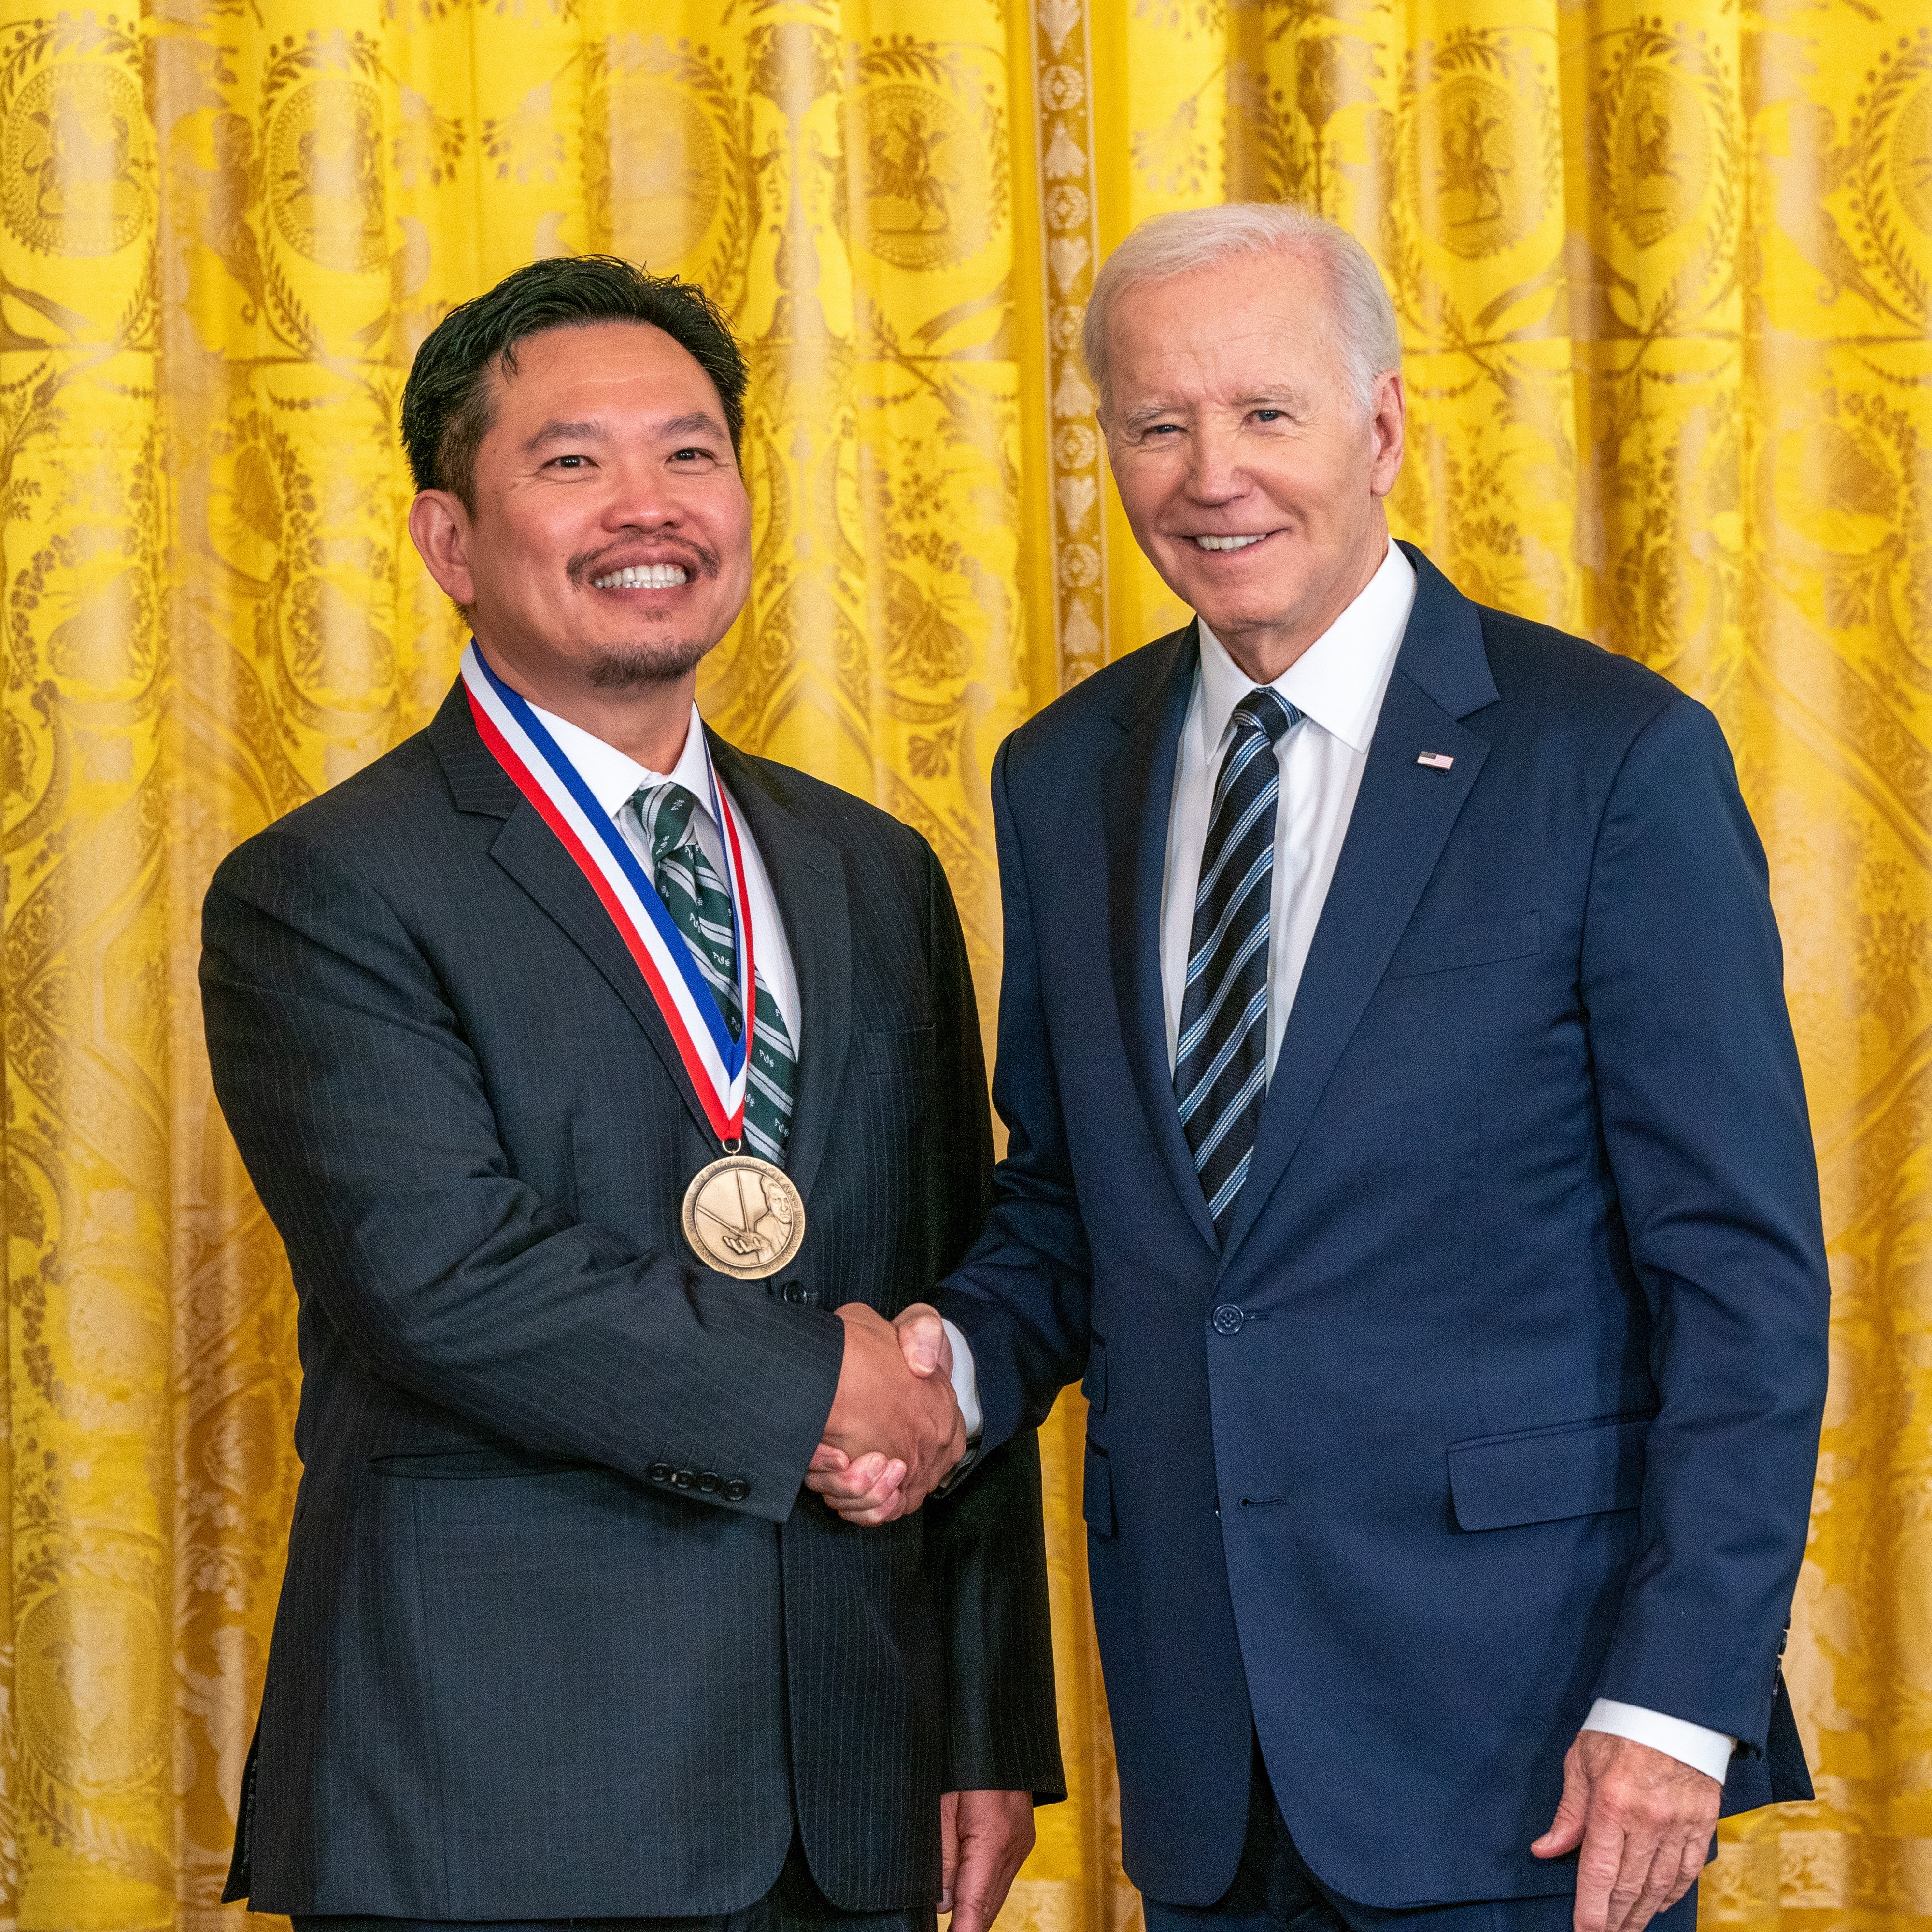 David Huang receiving a medal from President Biden